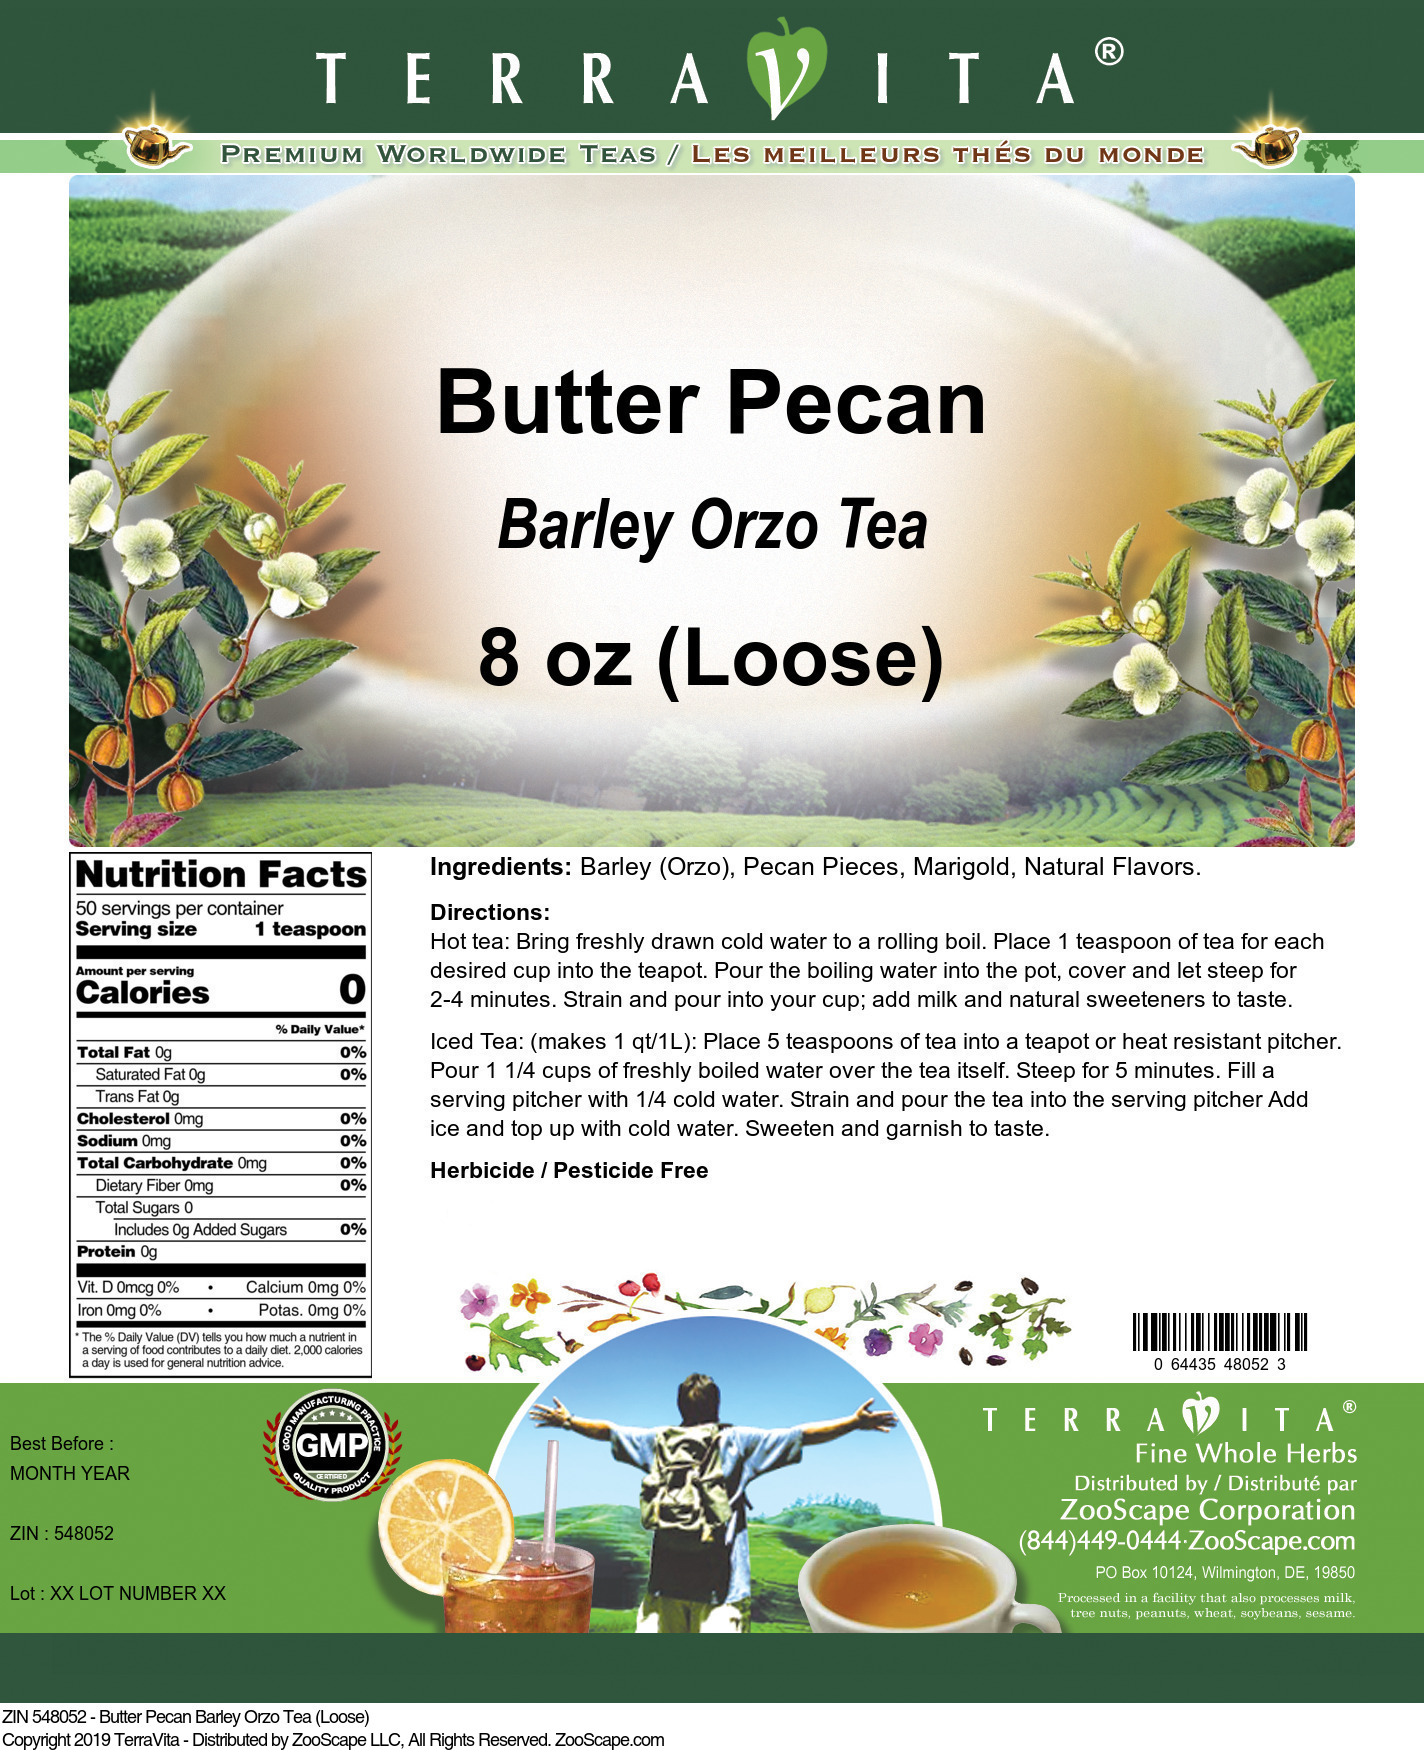 Butter Pecan Barley Orzo Tea (Loose) - Label